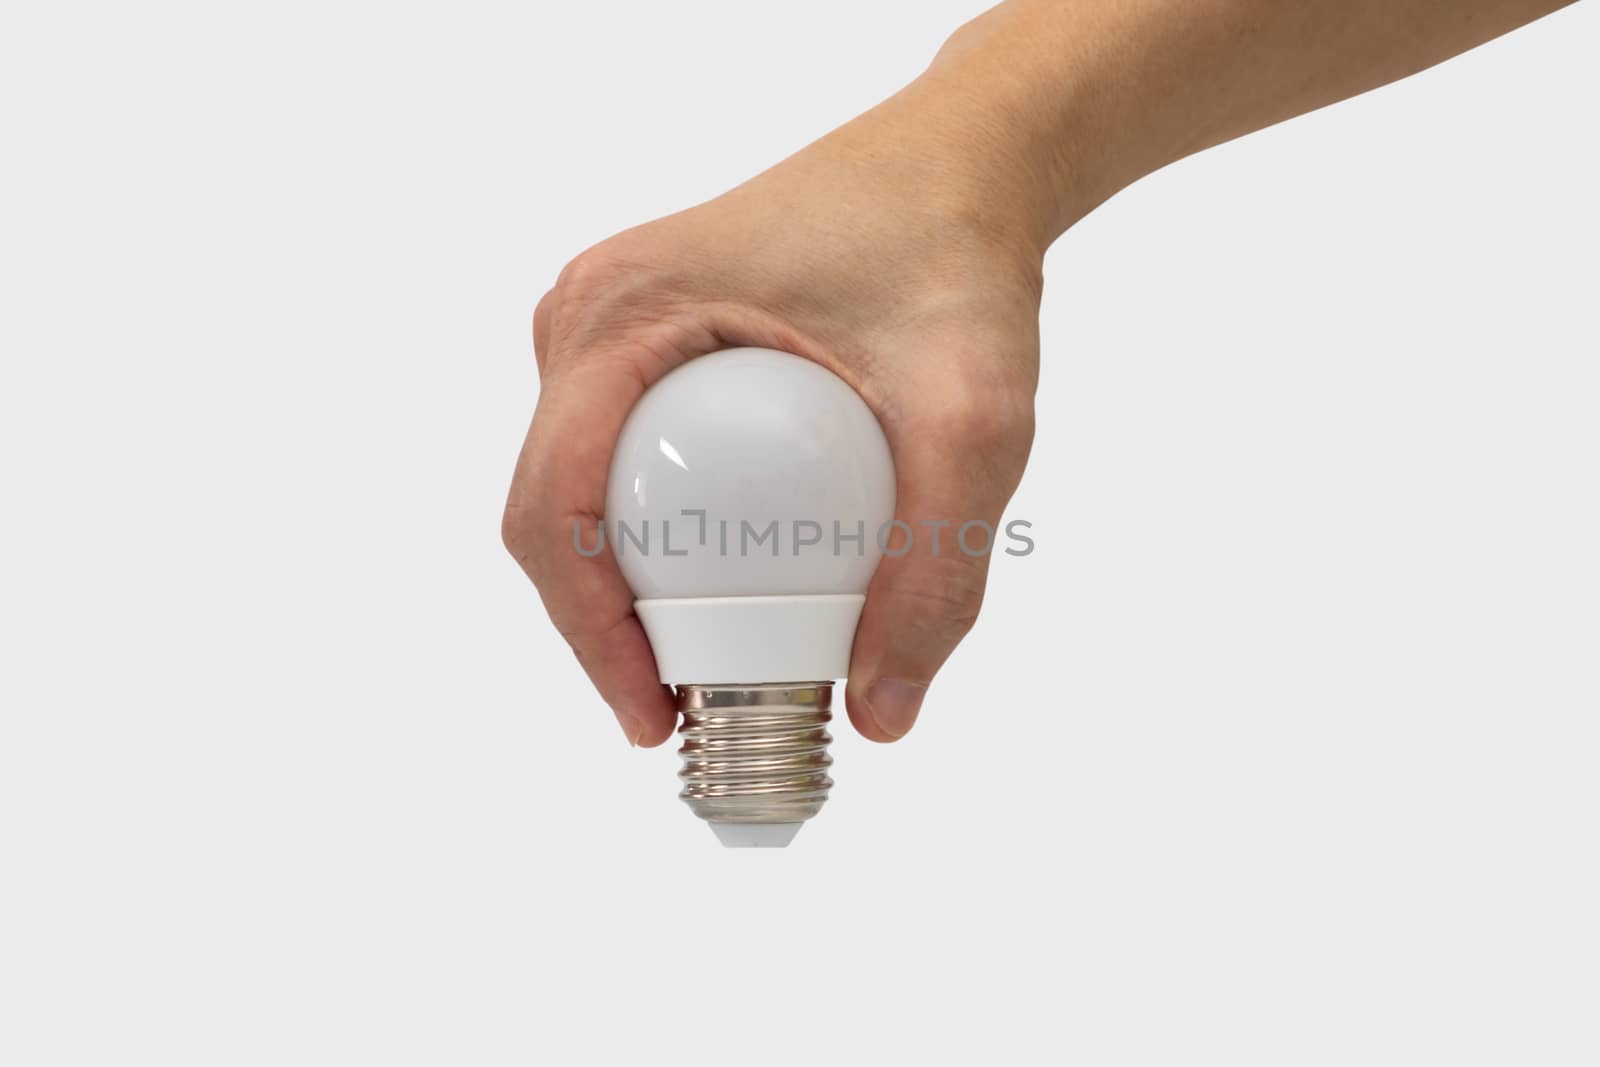 Hand holding a light bulb shape isolated on white background by feelartfeelant